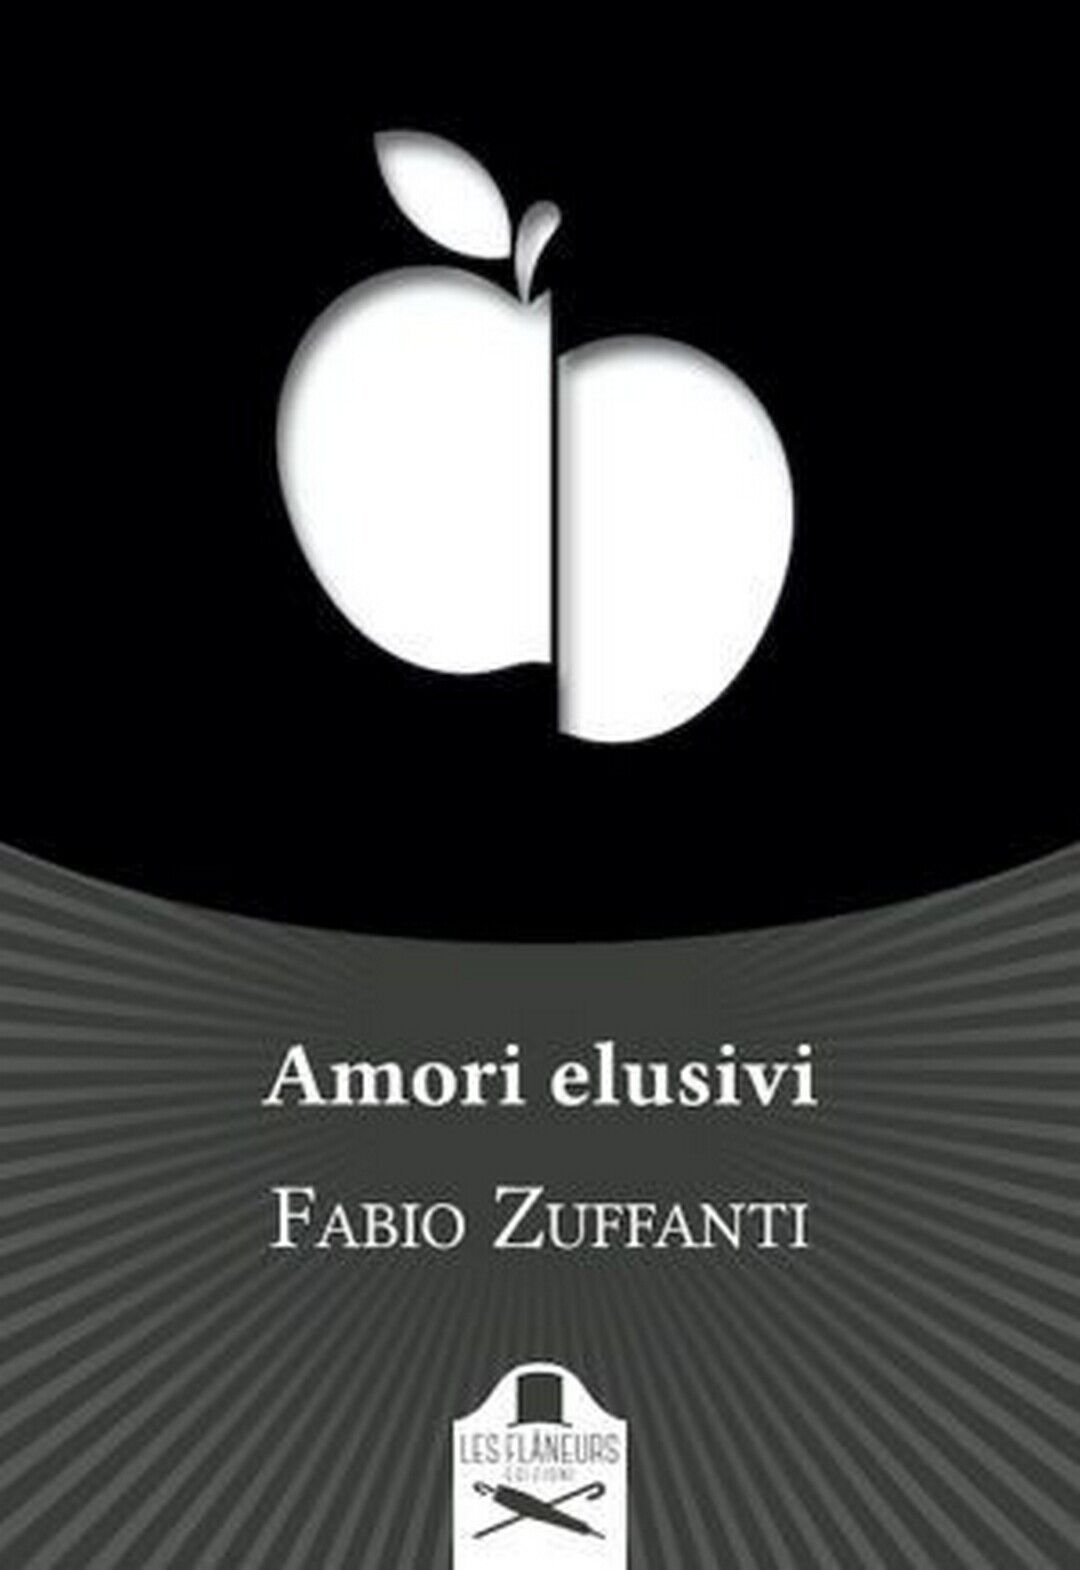 Amori elusivi  di Fabio Zuffanti ,  2020,  Les Flaneurs